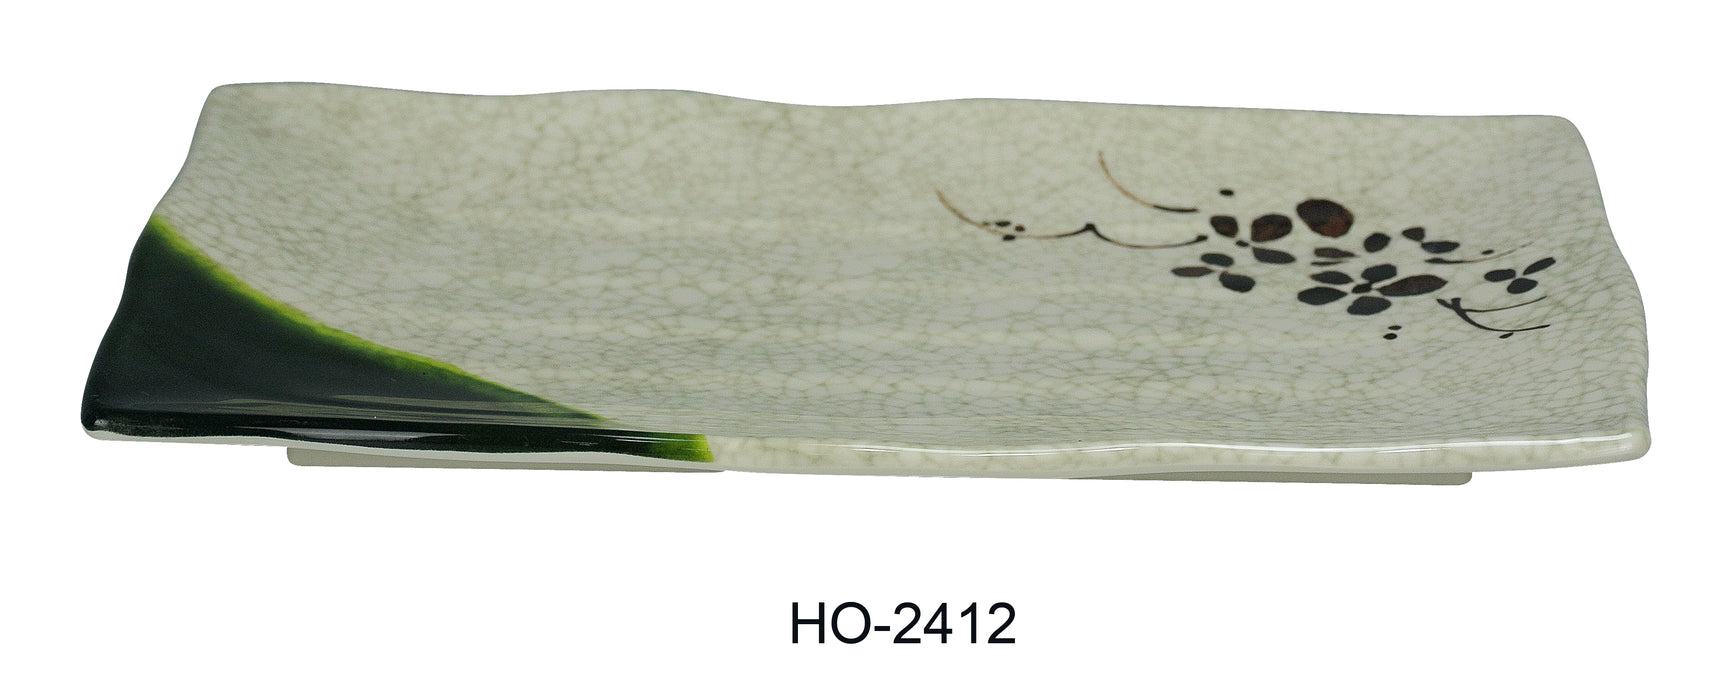 Yanco HO-2412 Honda Ripple Plate, Shape: Rectangular, Color: Three-Tone Green, Brown, Beige, Material: Melamine, Pack of 36